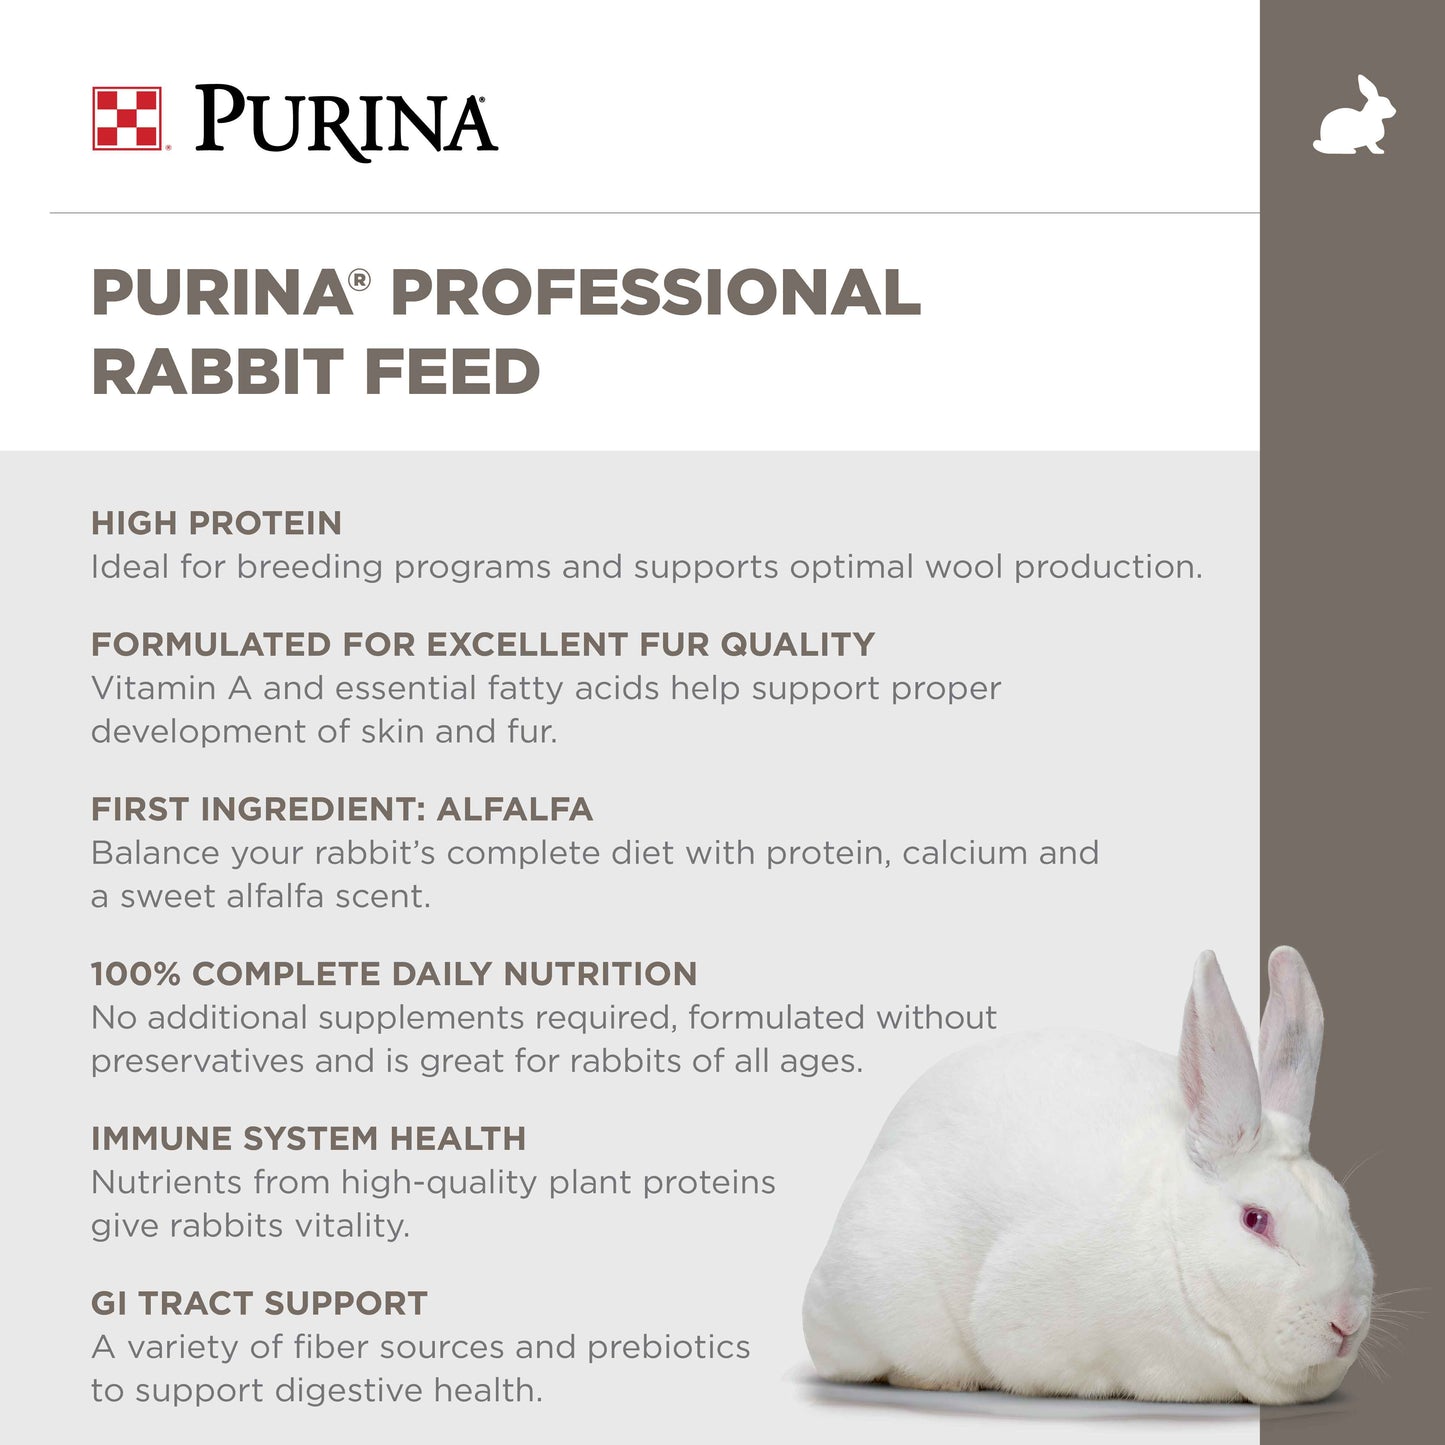 Purina Professional Rabbit Feed